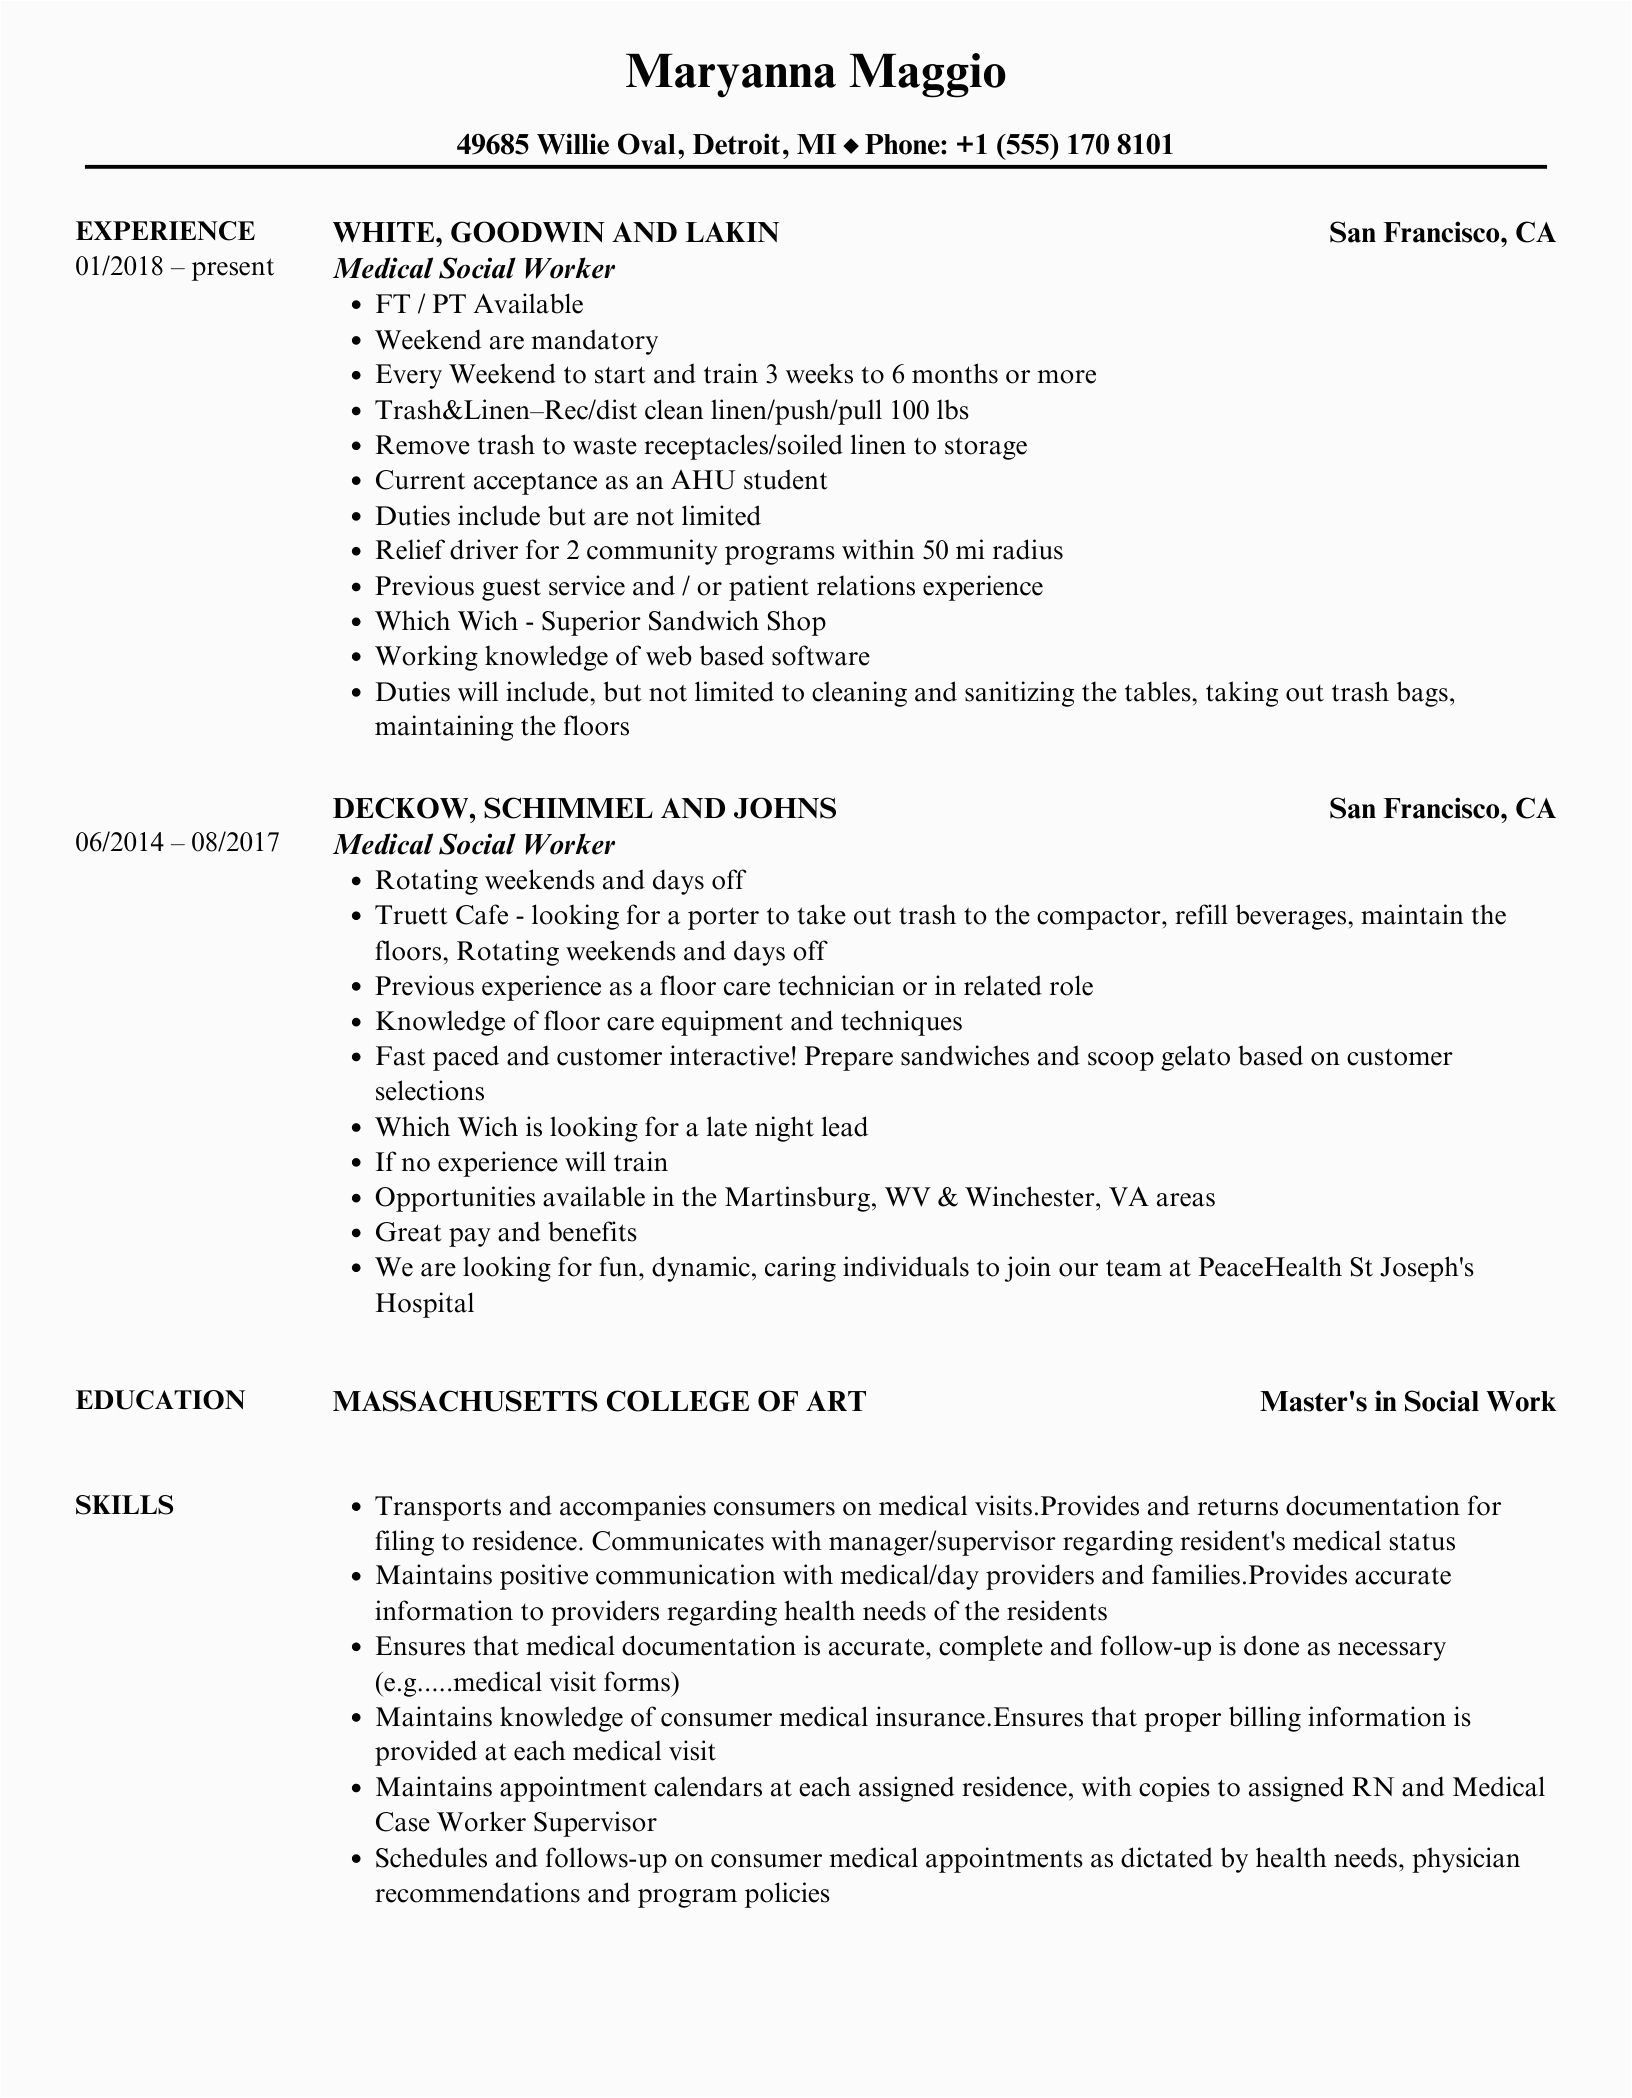 Sample Resume for Medical social Worker Medical social Worker Resume Samples